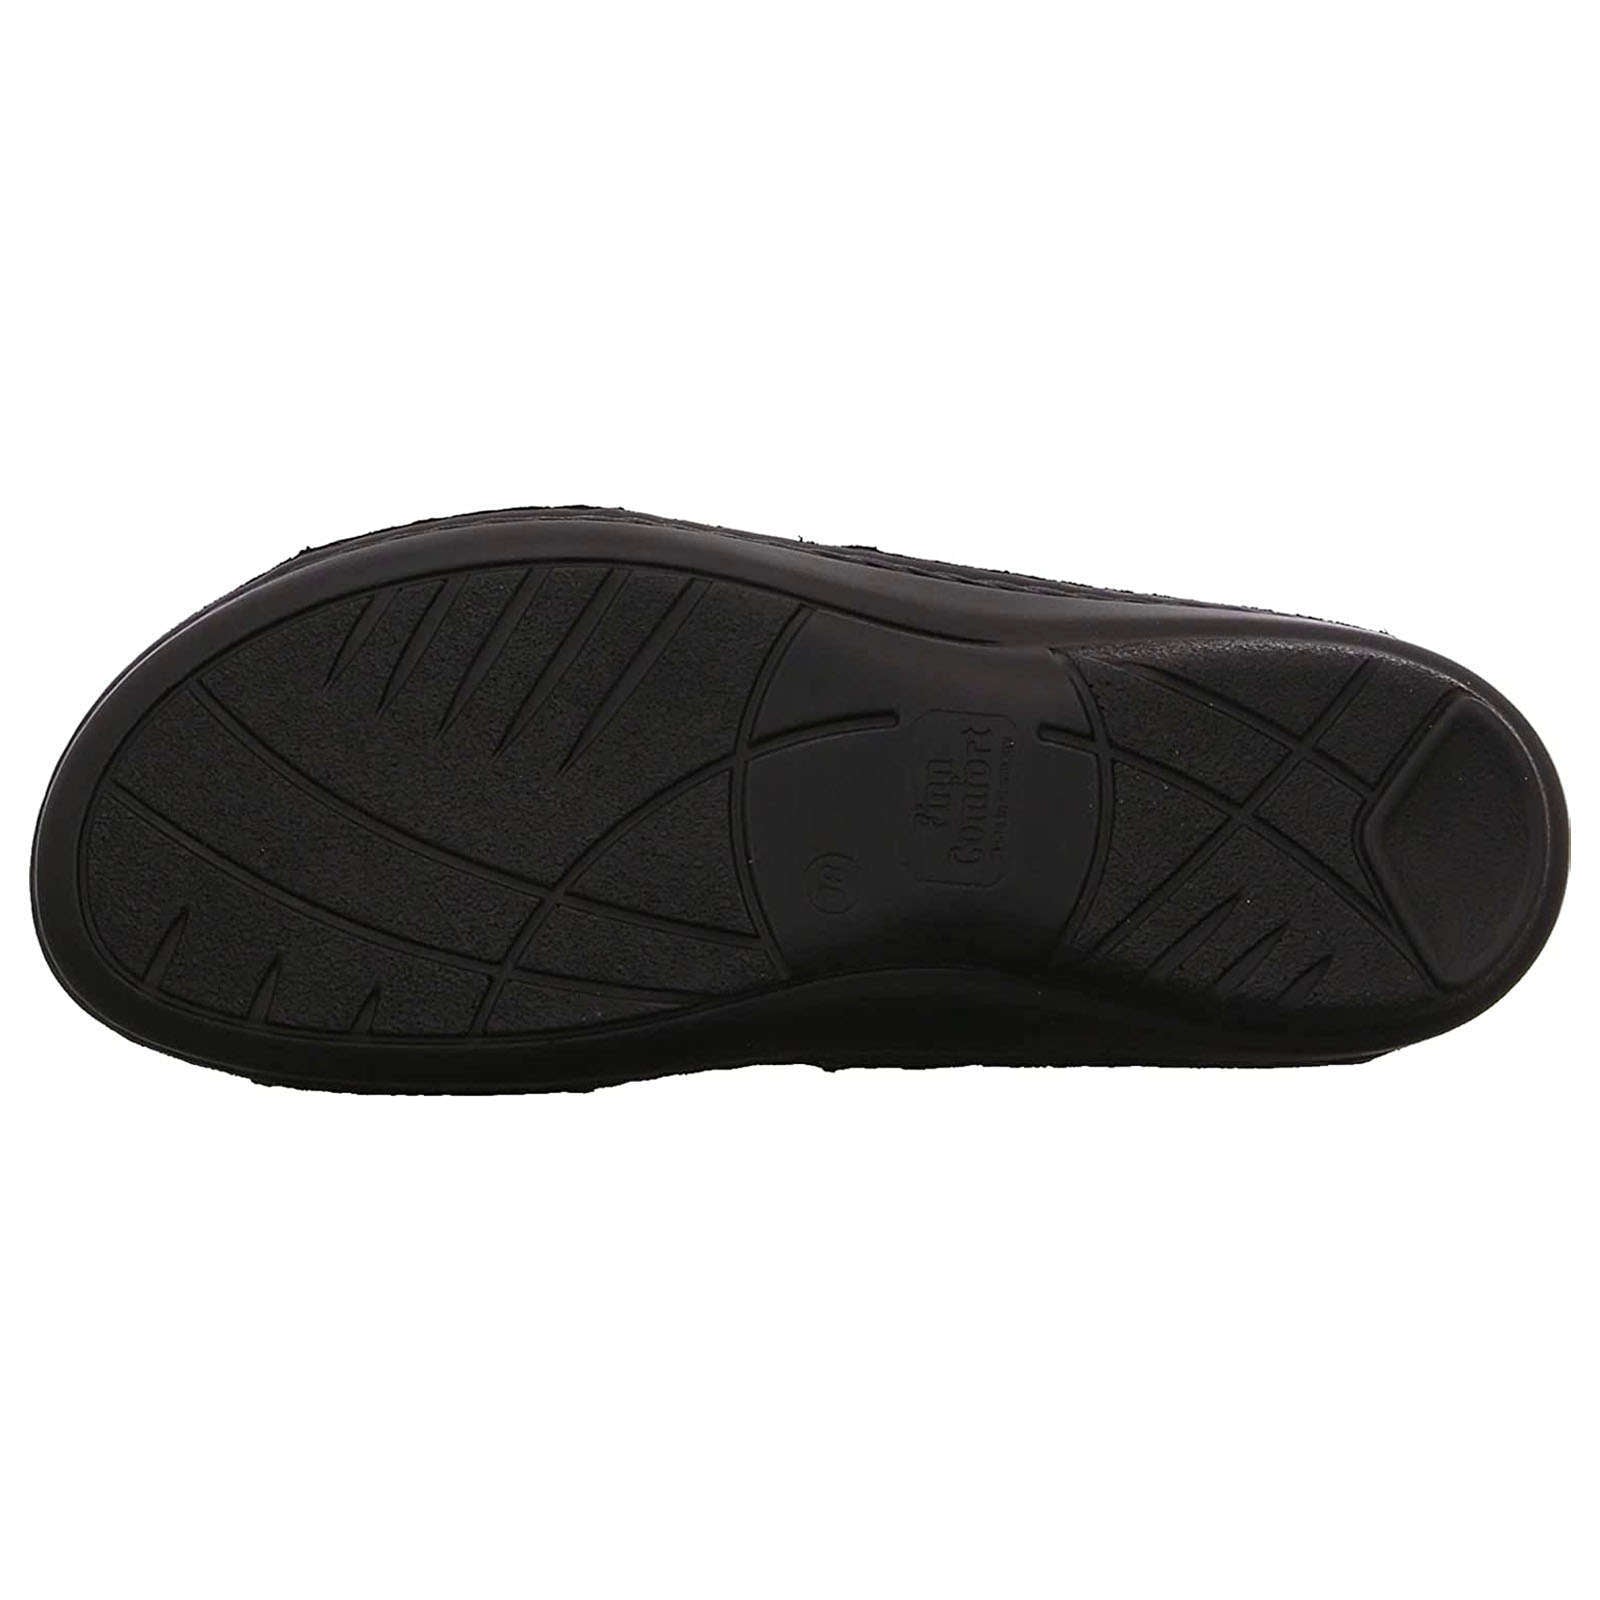 Finn Comfort Verin Nubuck Leather Women's Slip-On Sandals#color_black